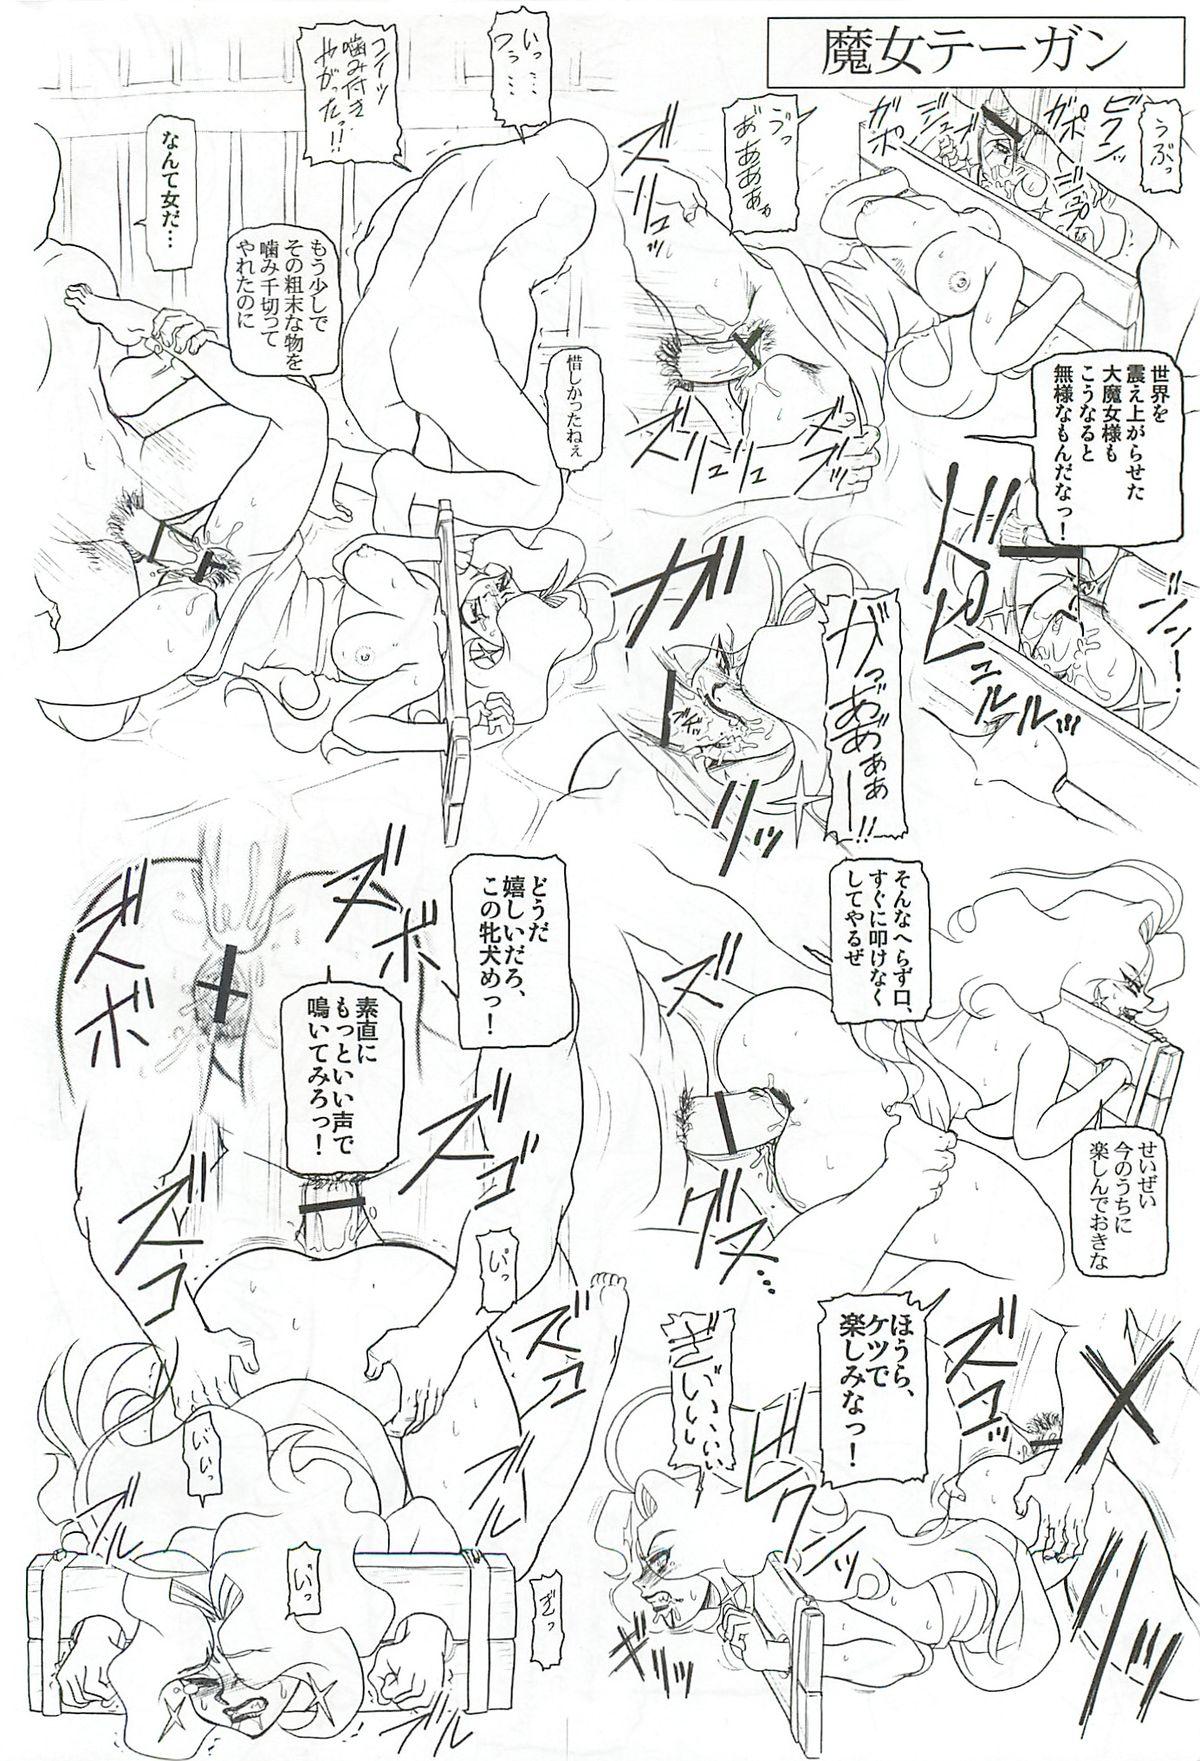 CHARA EMU FLASH BACK Uruwashi no Mama P 02 W☆BR009 22